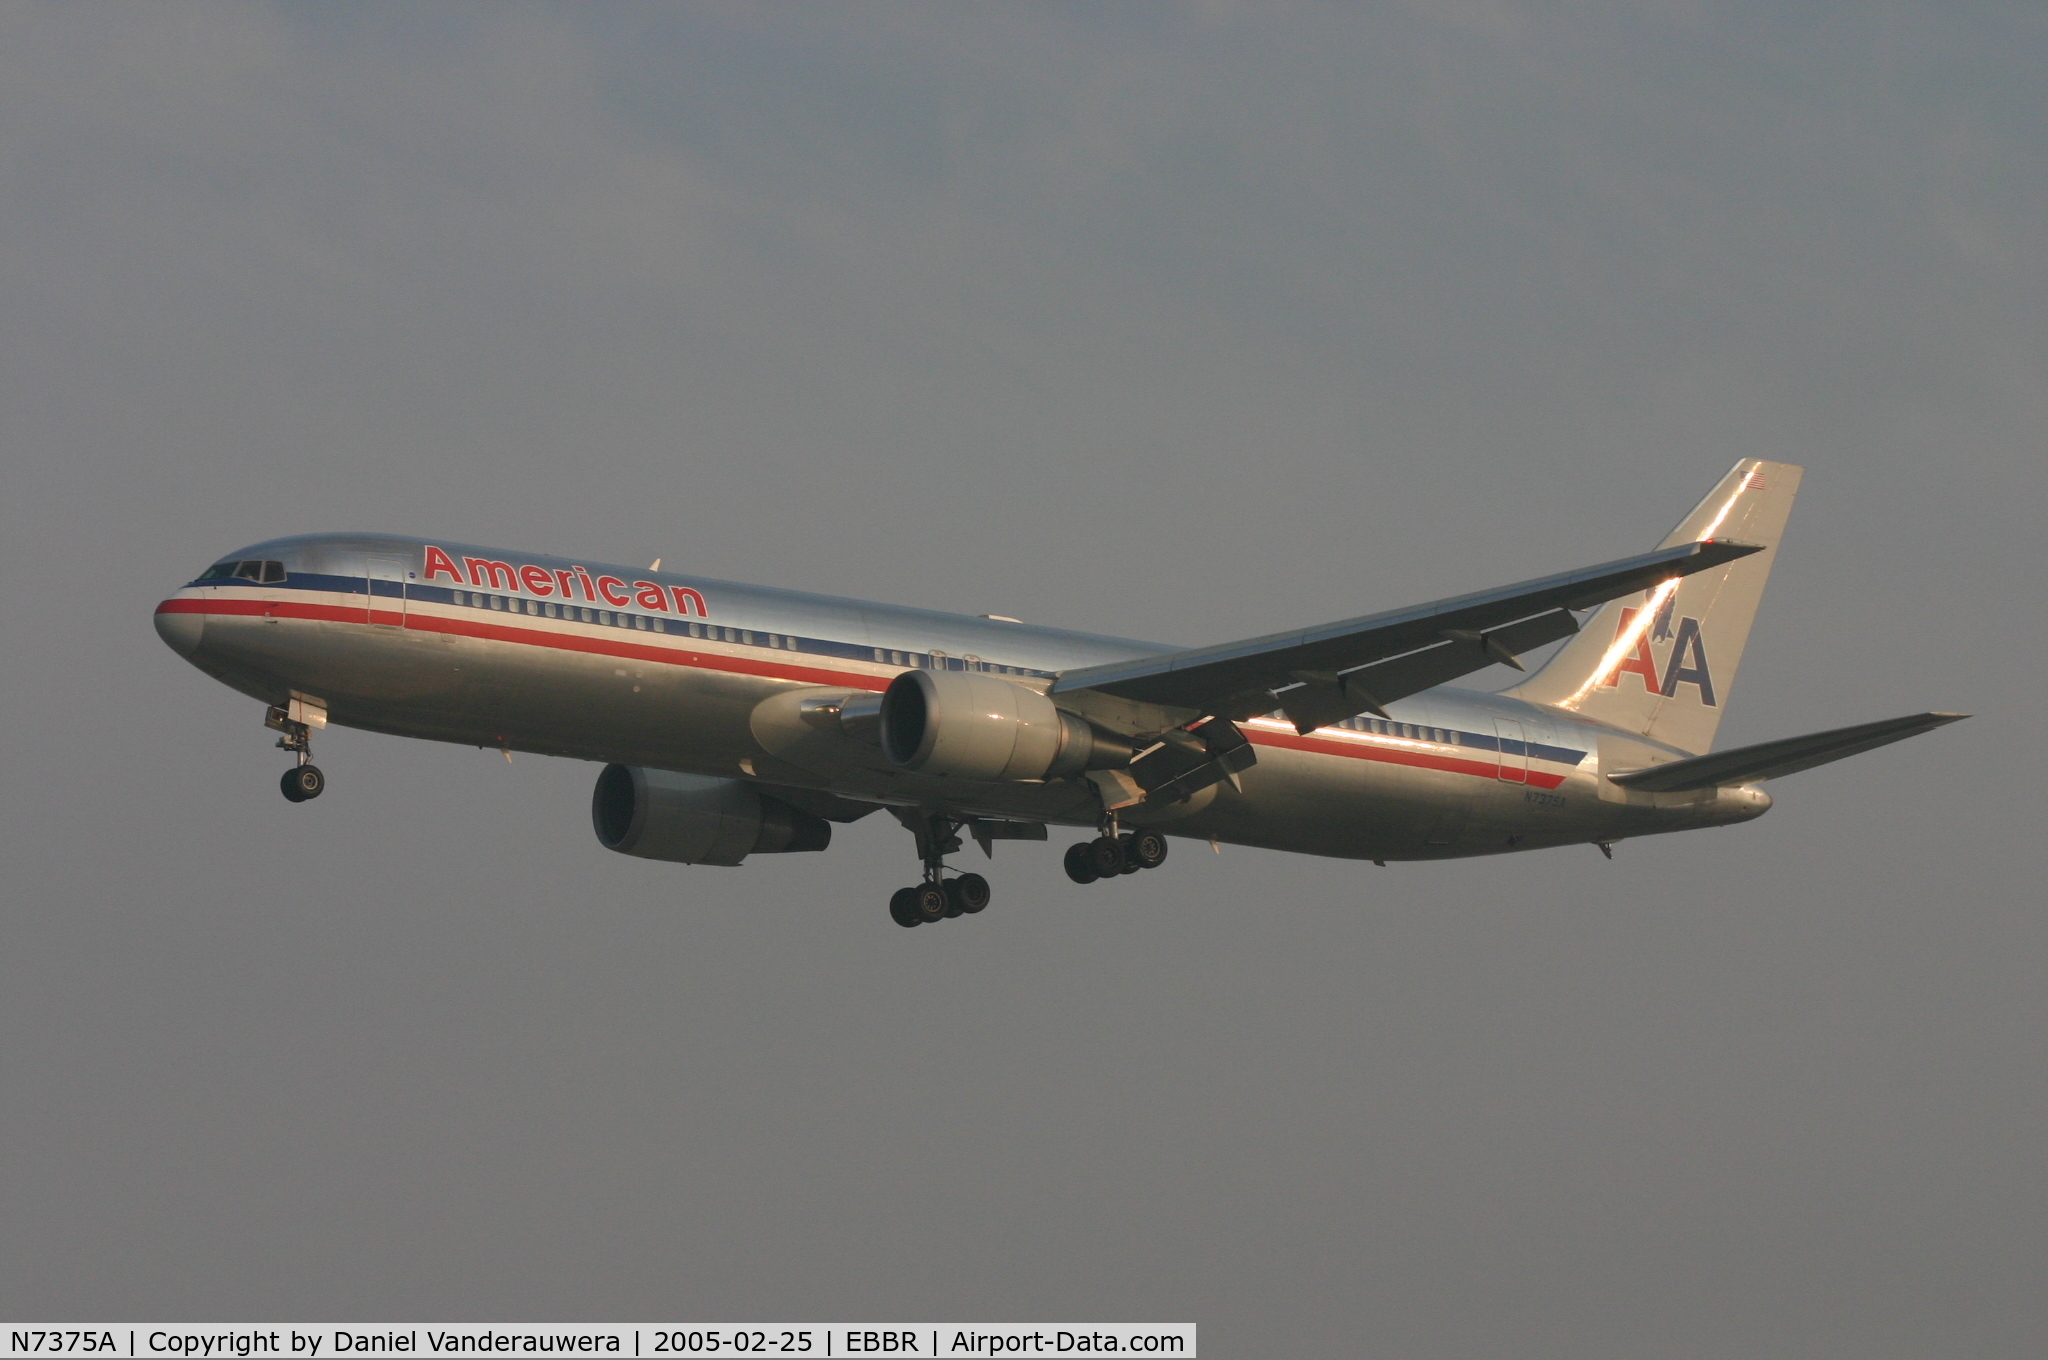 N7375A, 1992 Boeing 767-323 C/N 25202, arrival of flight AA172 to rwy 25L